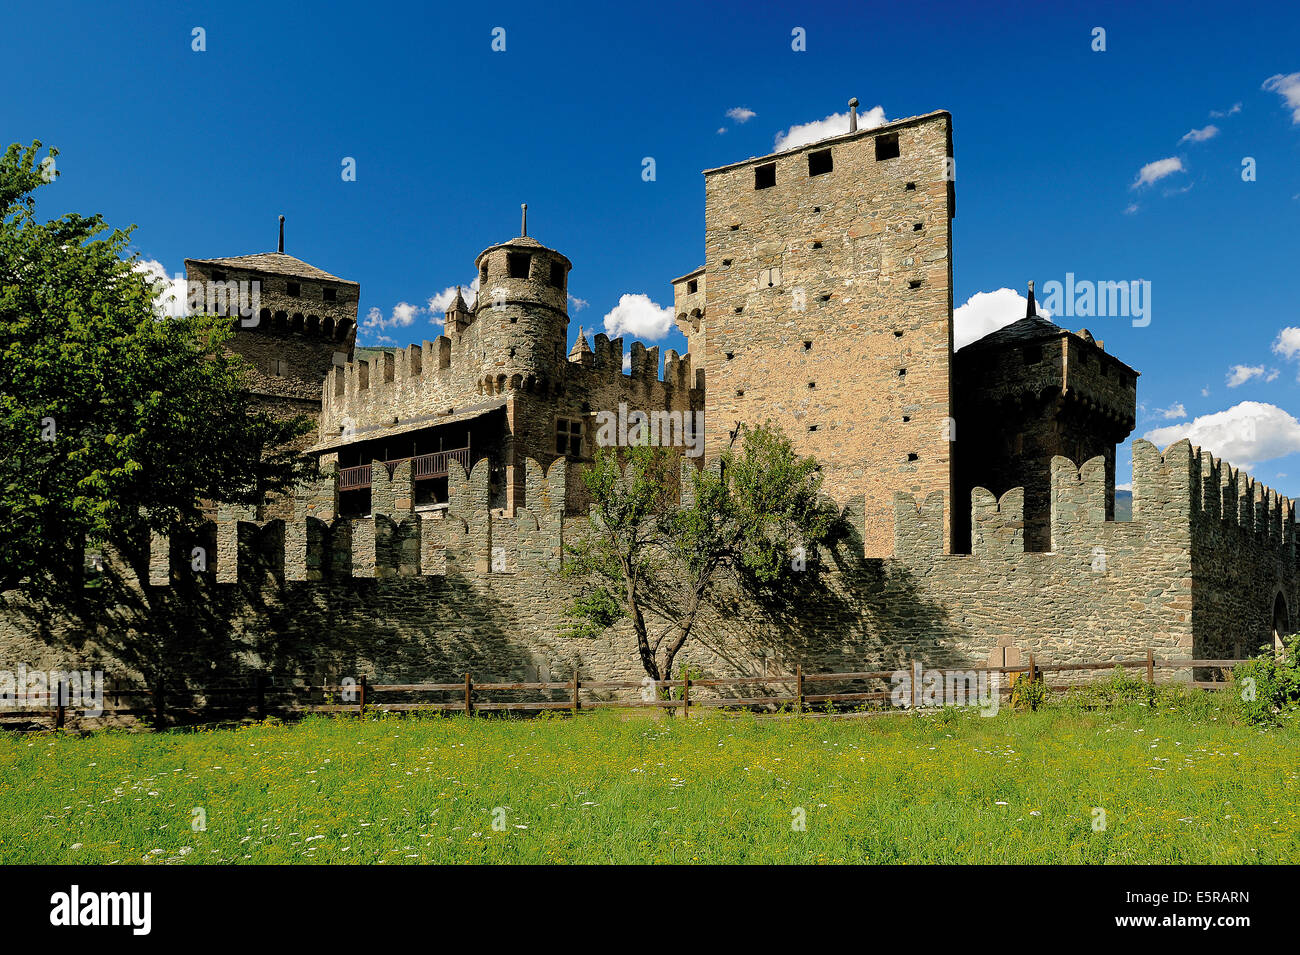 Valle d'Aosta Fenis castle Stock Photo